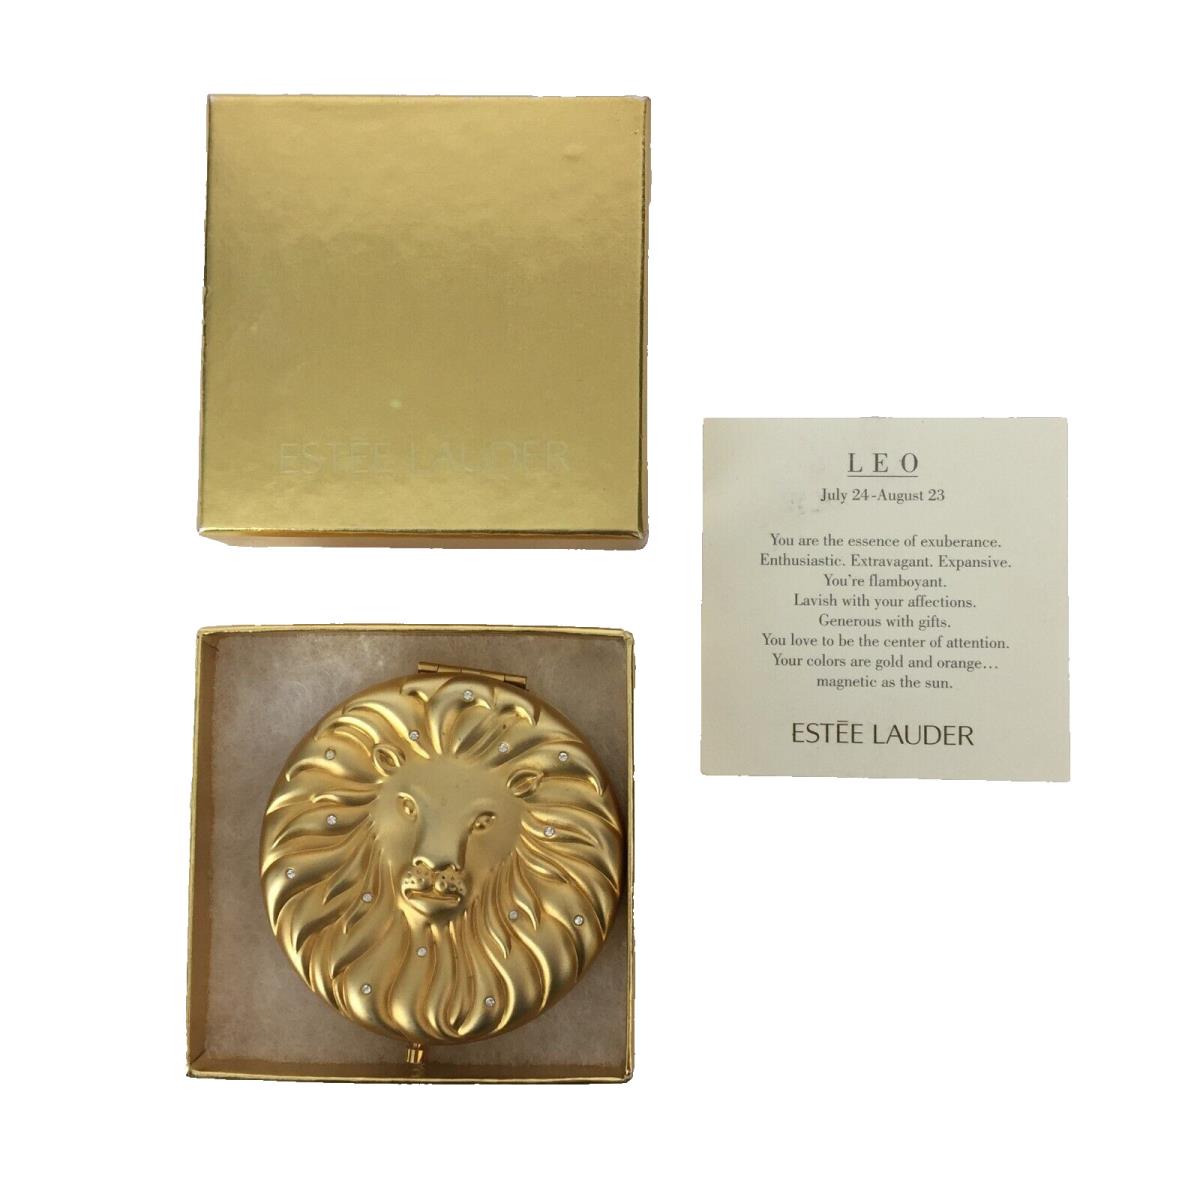 Estee Lauder Golden Leo Compact Lucidity 06 Translucent Pressed Powder Crystals